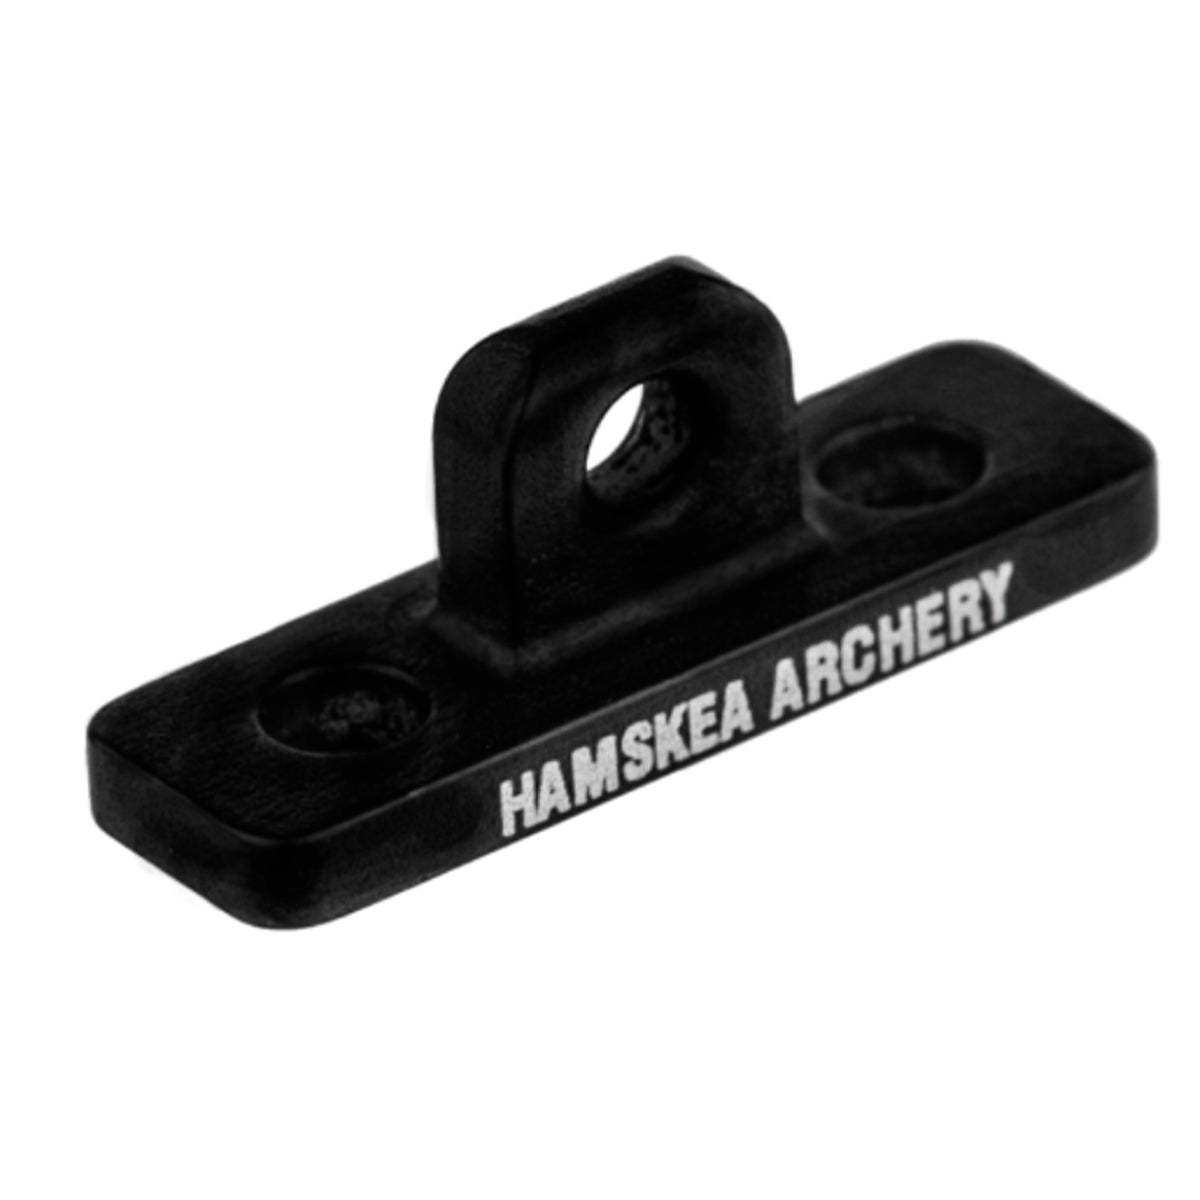 Hamskea Limb Cord Attachment Bracket in  by GOHUNT | Hamskea - GOHUNT Shop